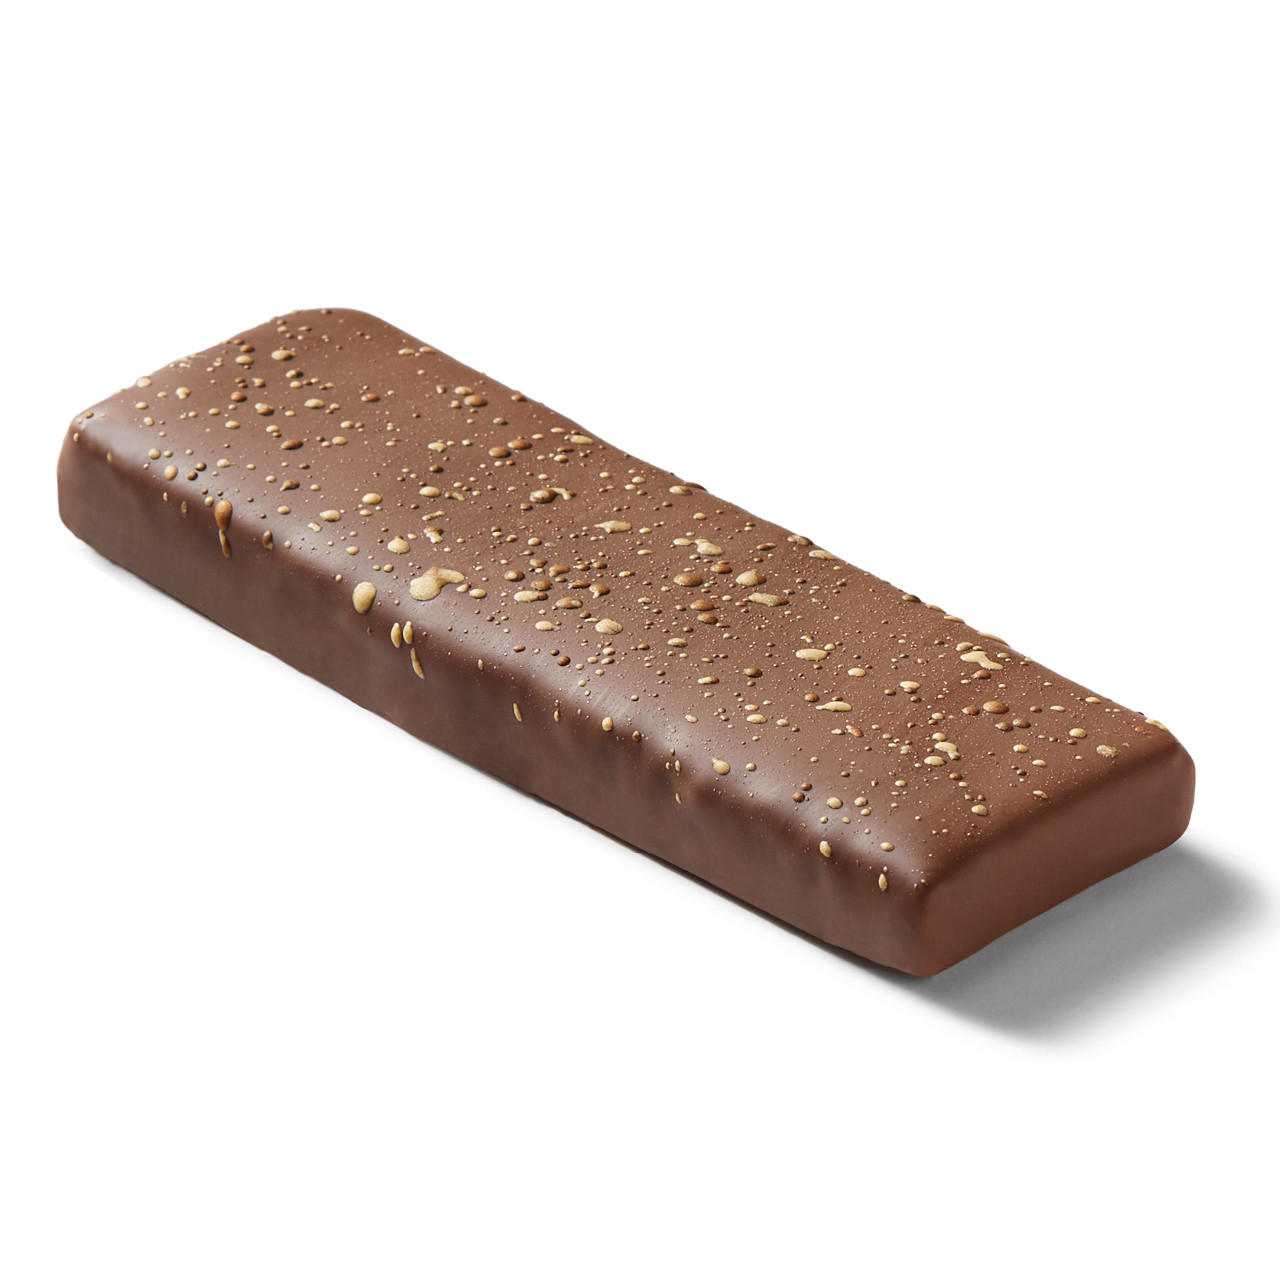 Peanut Butter & Jelly Milk Chocolate 1:1, 125mg